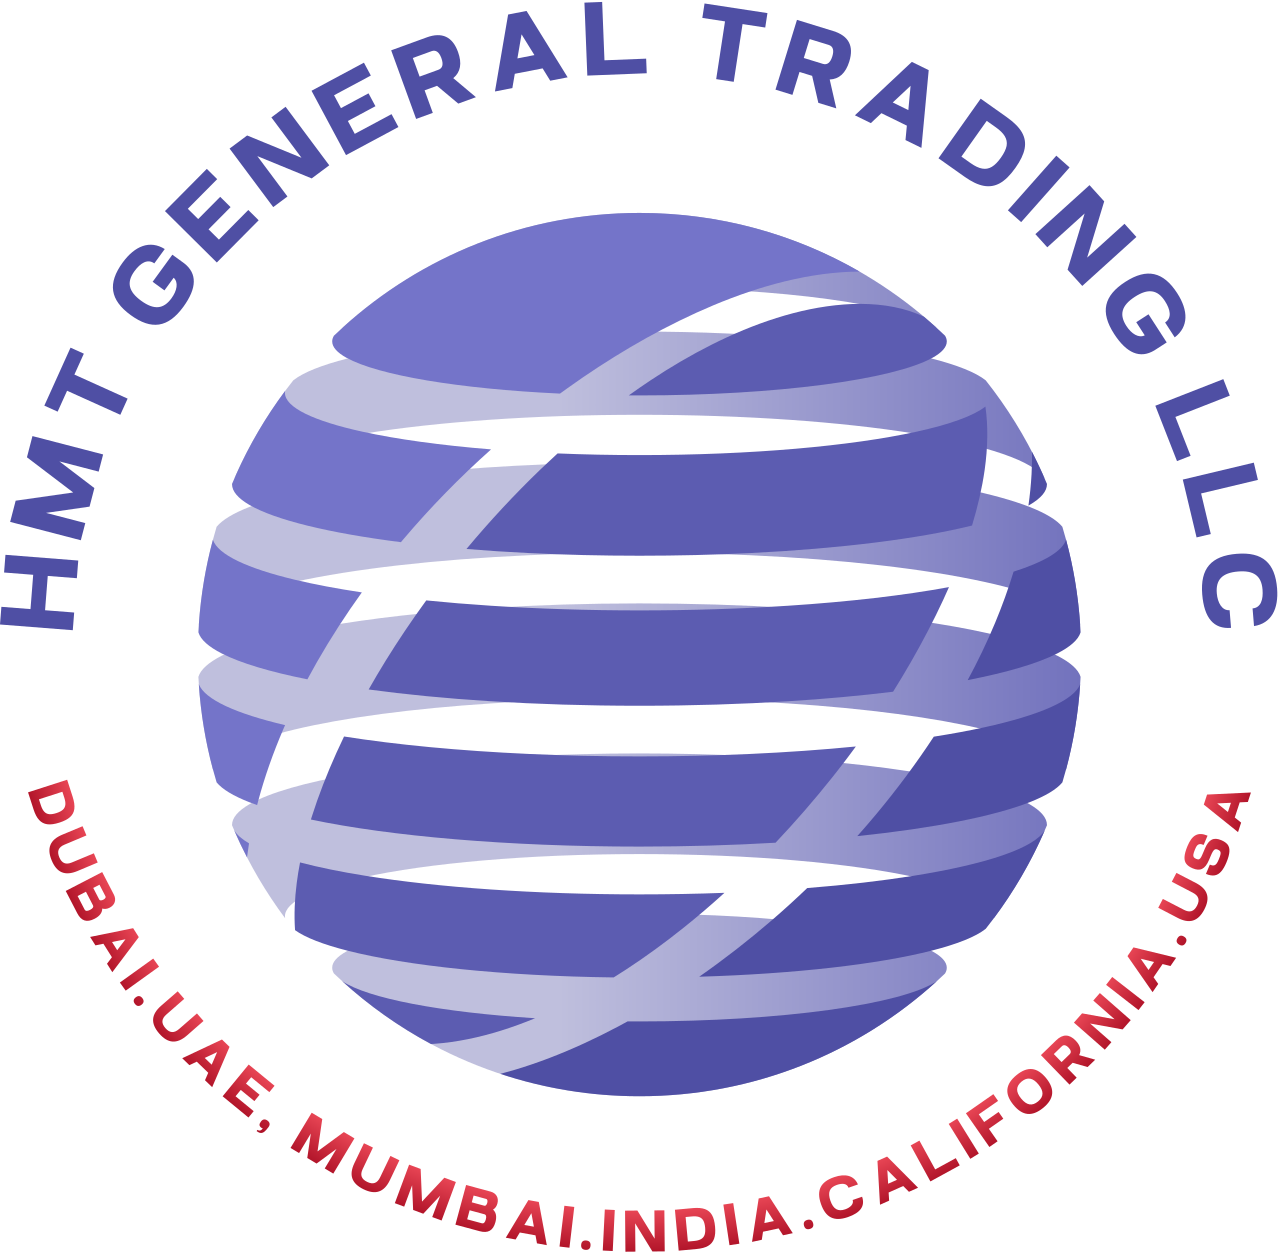 HMT GENERAL TRADING LLC's web page